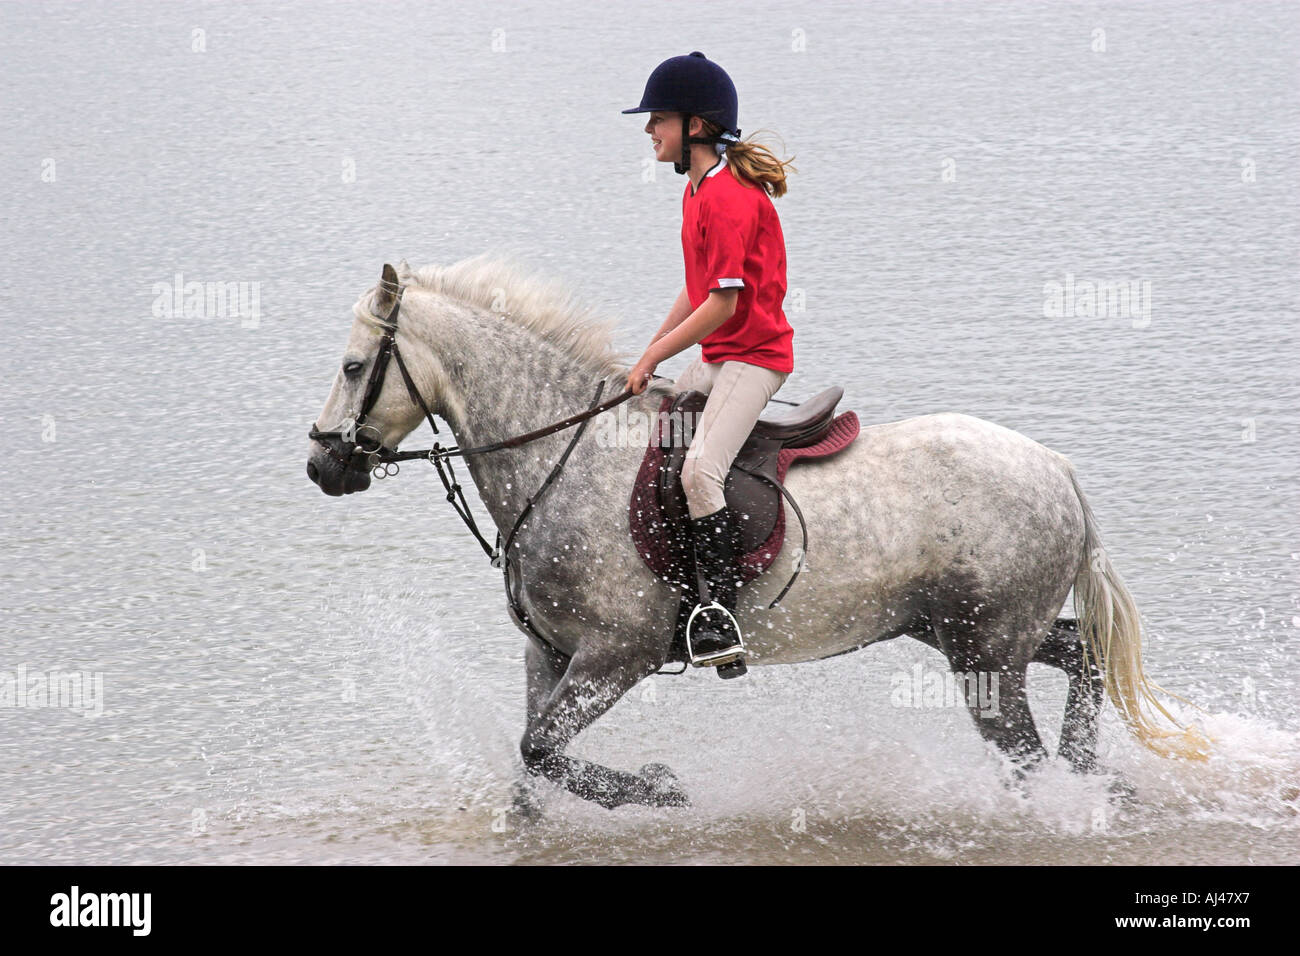 Girl riding horse in sea Stock Photo